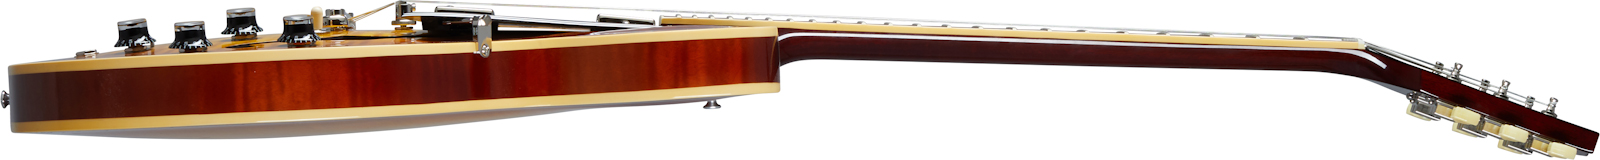 Gibson Es-335 Figured Original 2020 2h Ht Rw - Iced Tea - Semi-hollow electric guitar - Variation 2